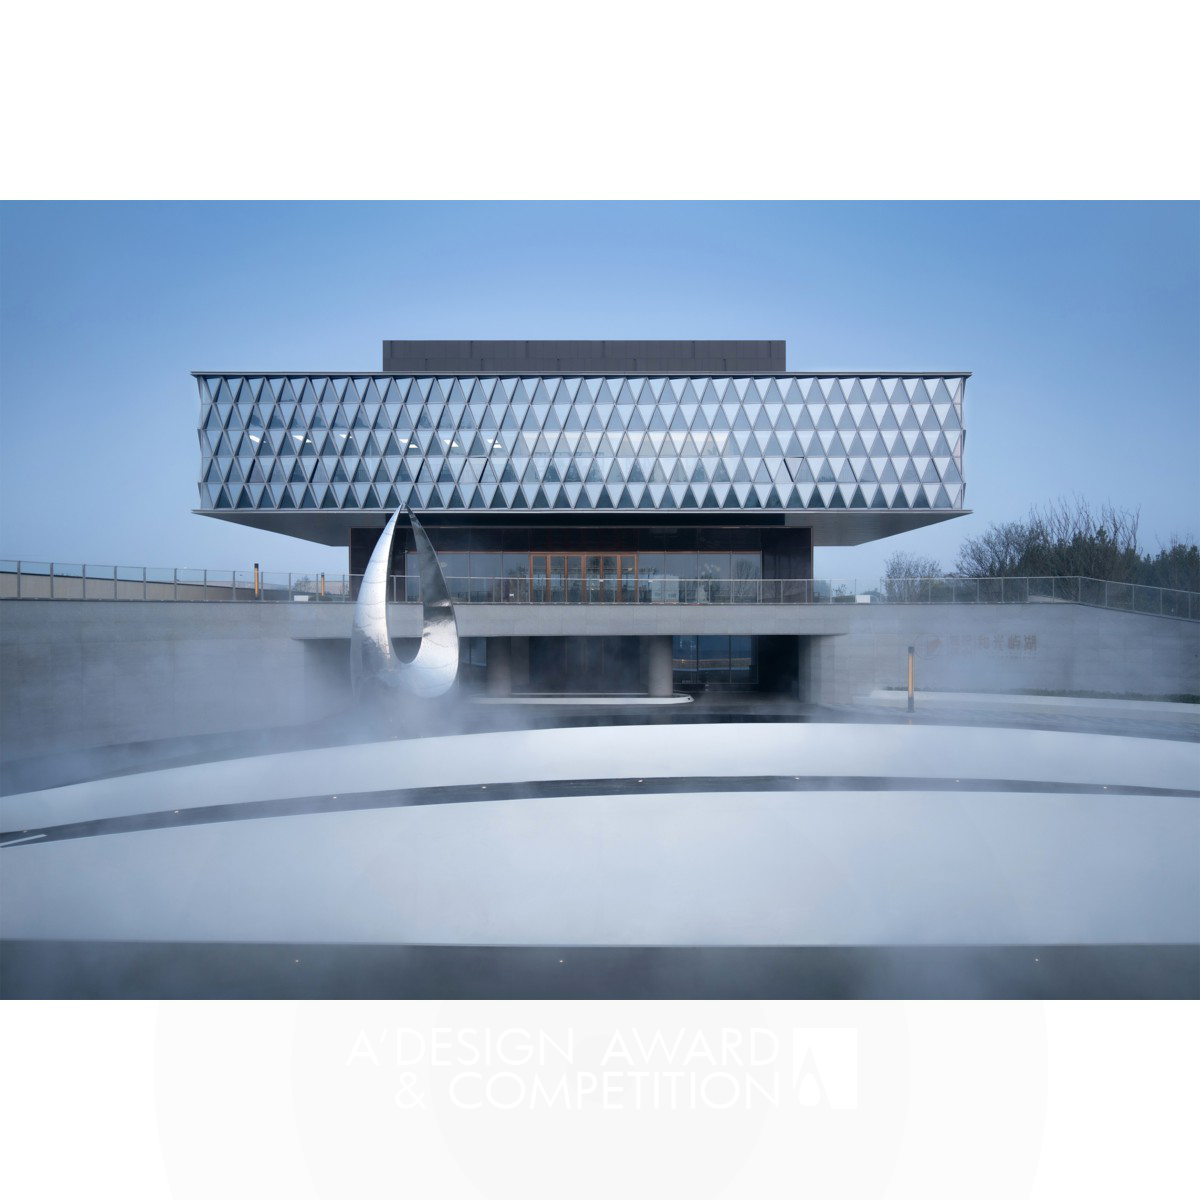 Zhubo Design Introduces Kirin Island: A Modern Exhibition Center